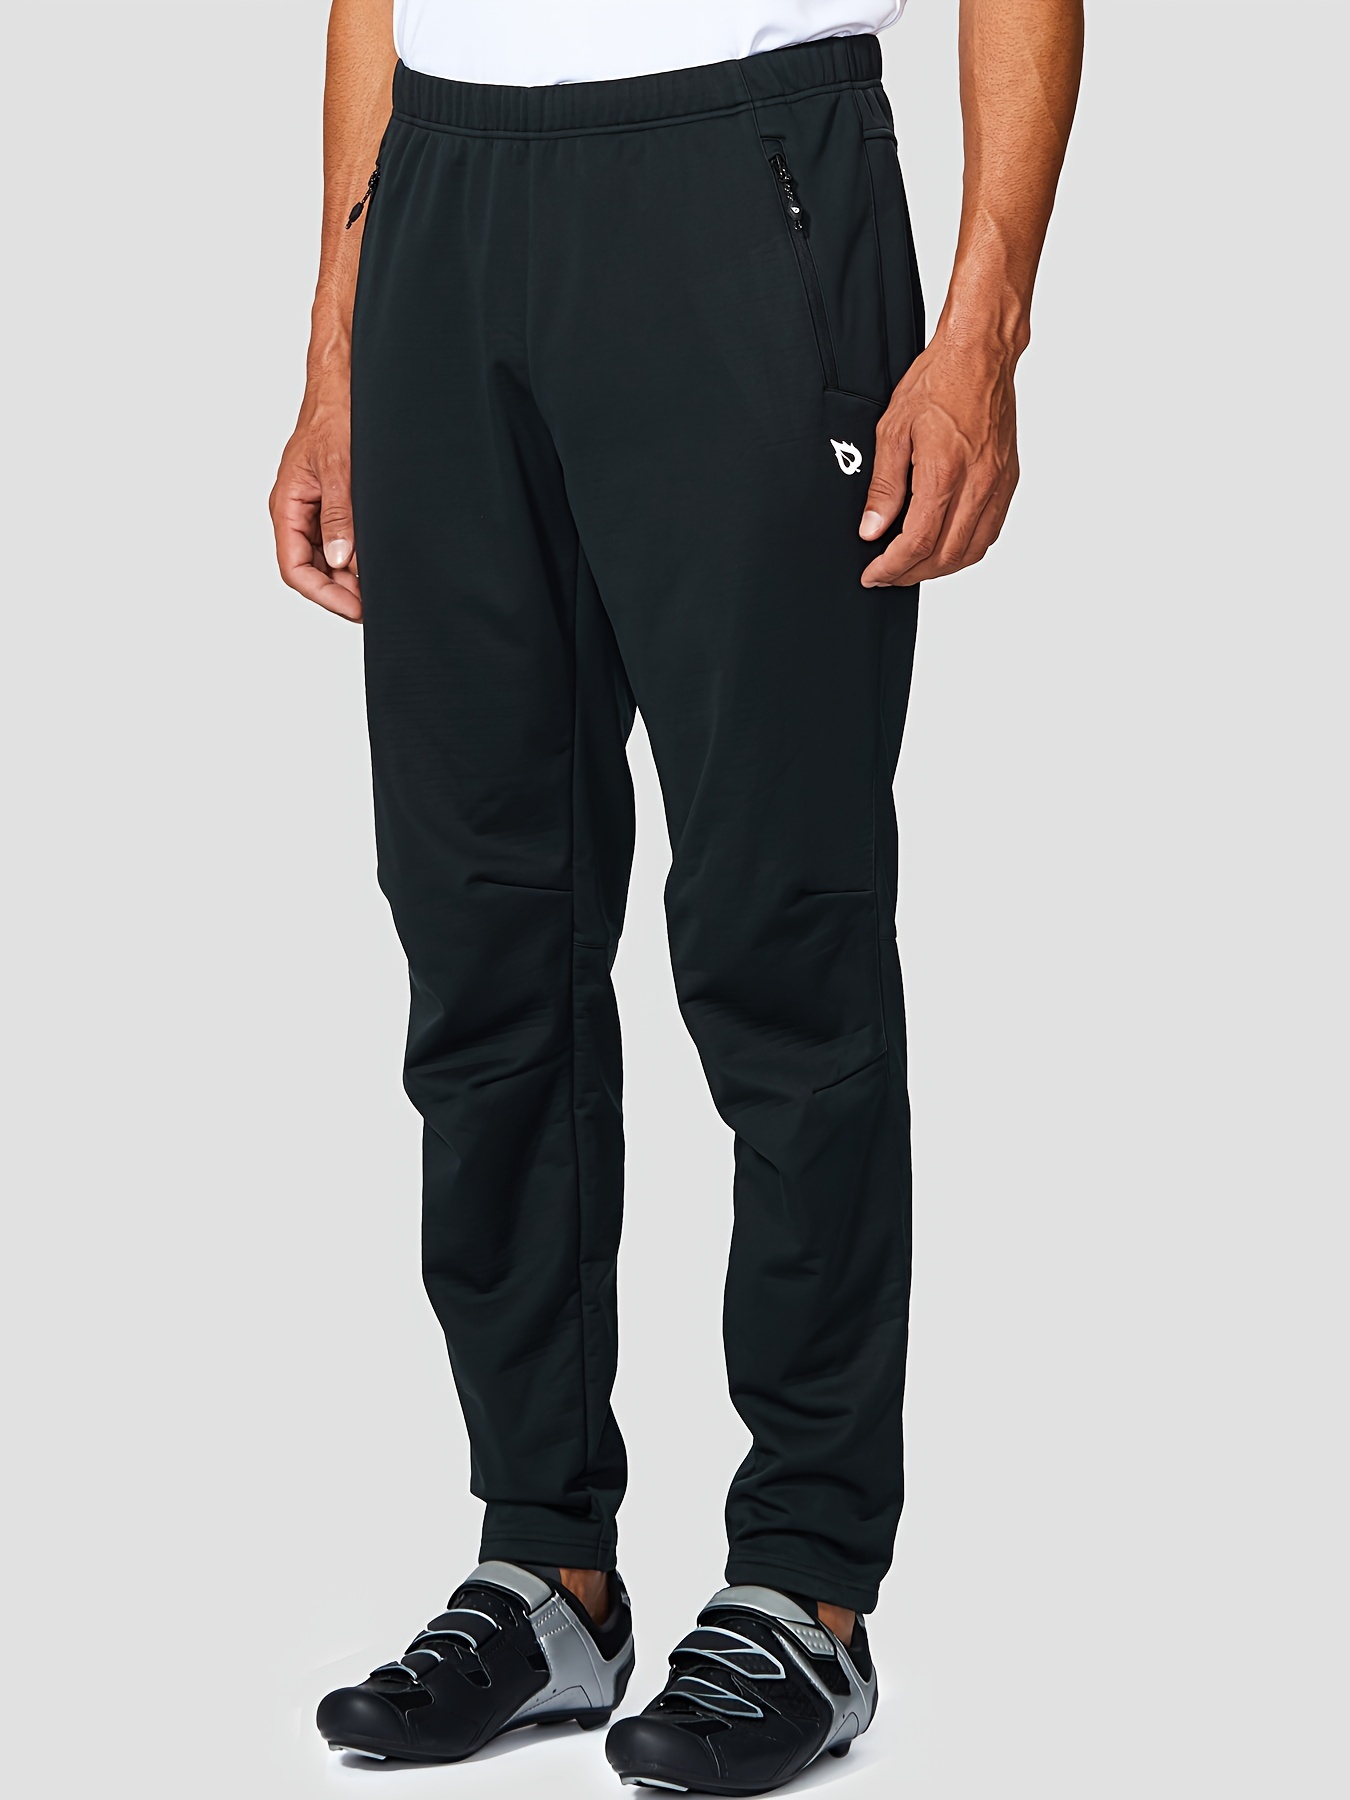 BALEAF Men's Hiking Pants Grey Sweatpants Cargo Joggers for